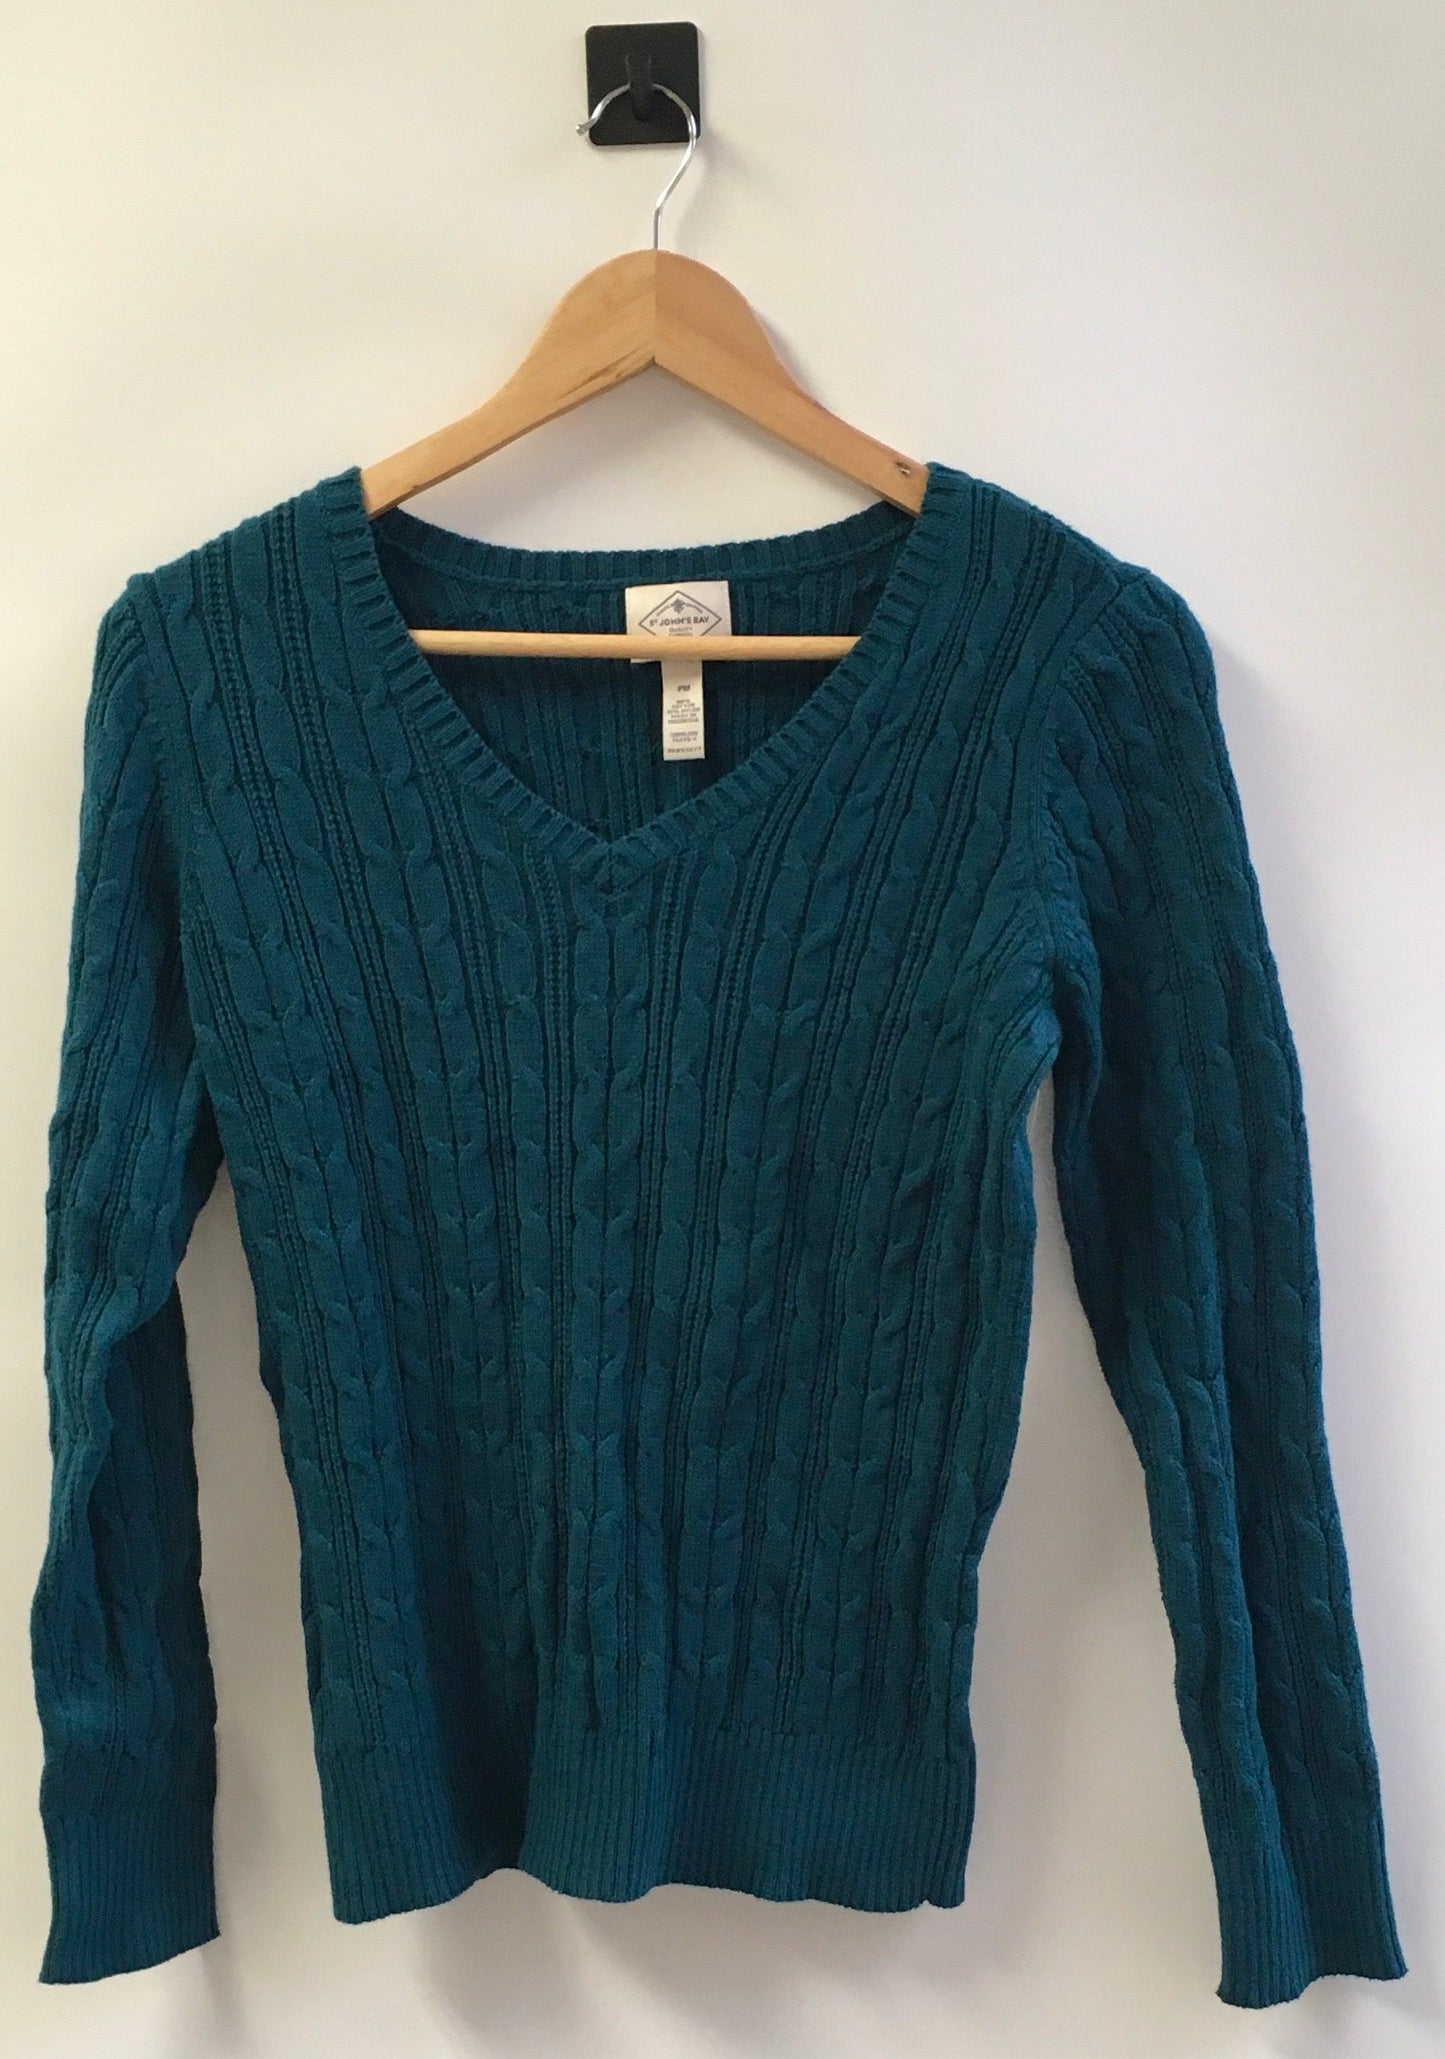 Sweater By St Johns Bay  Size: Petite  Medium